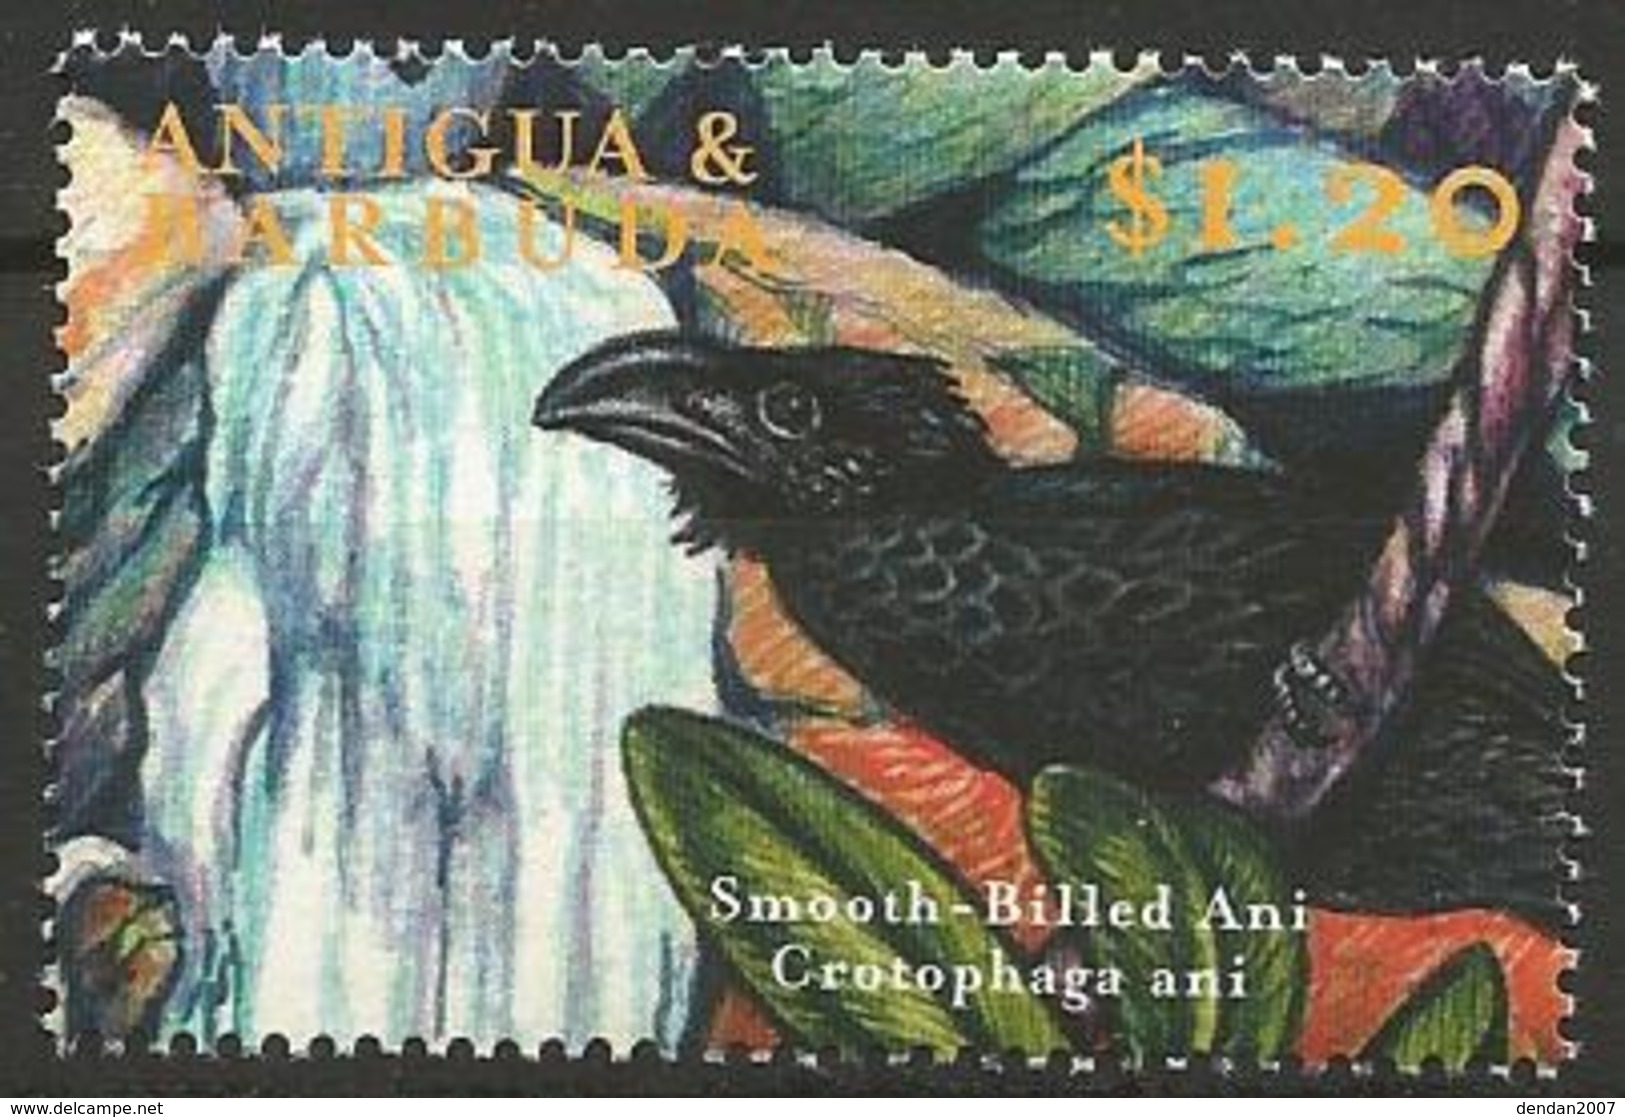 Antigua & Barbuda 2000 - MNH - Smooth-billed Ani (Crotophaga Ani) - Cuckoos & Turacos